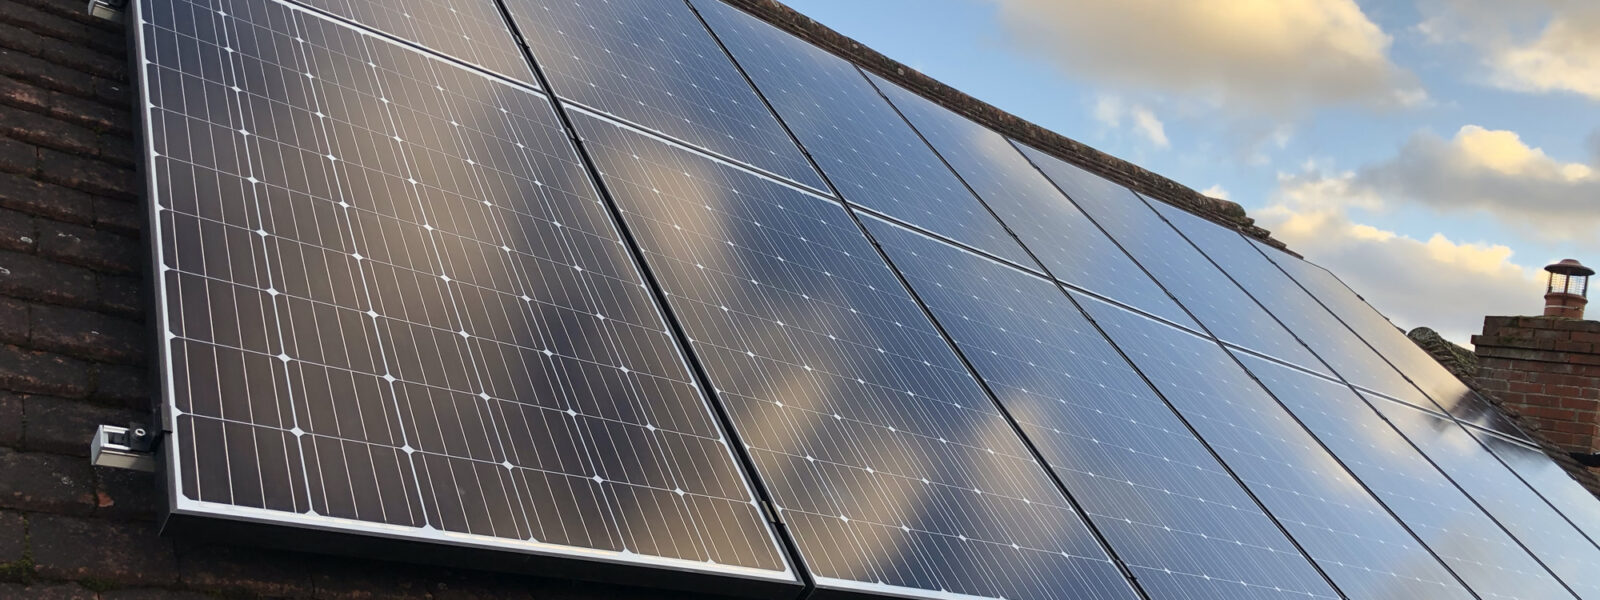 solar_panels_on_roof